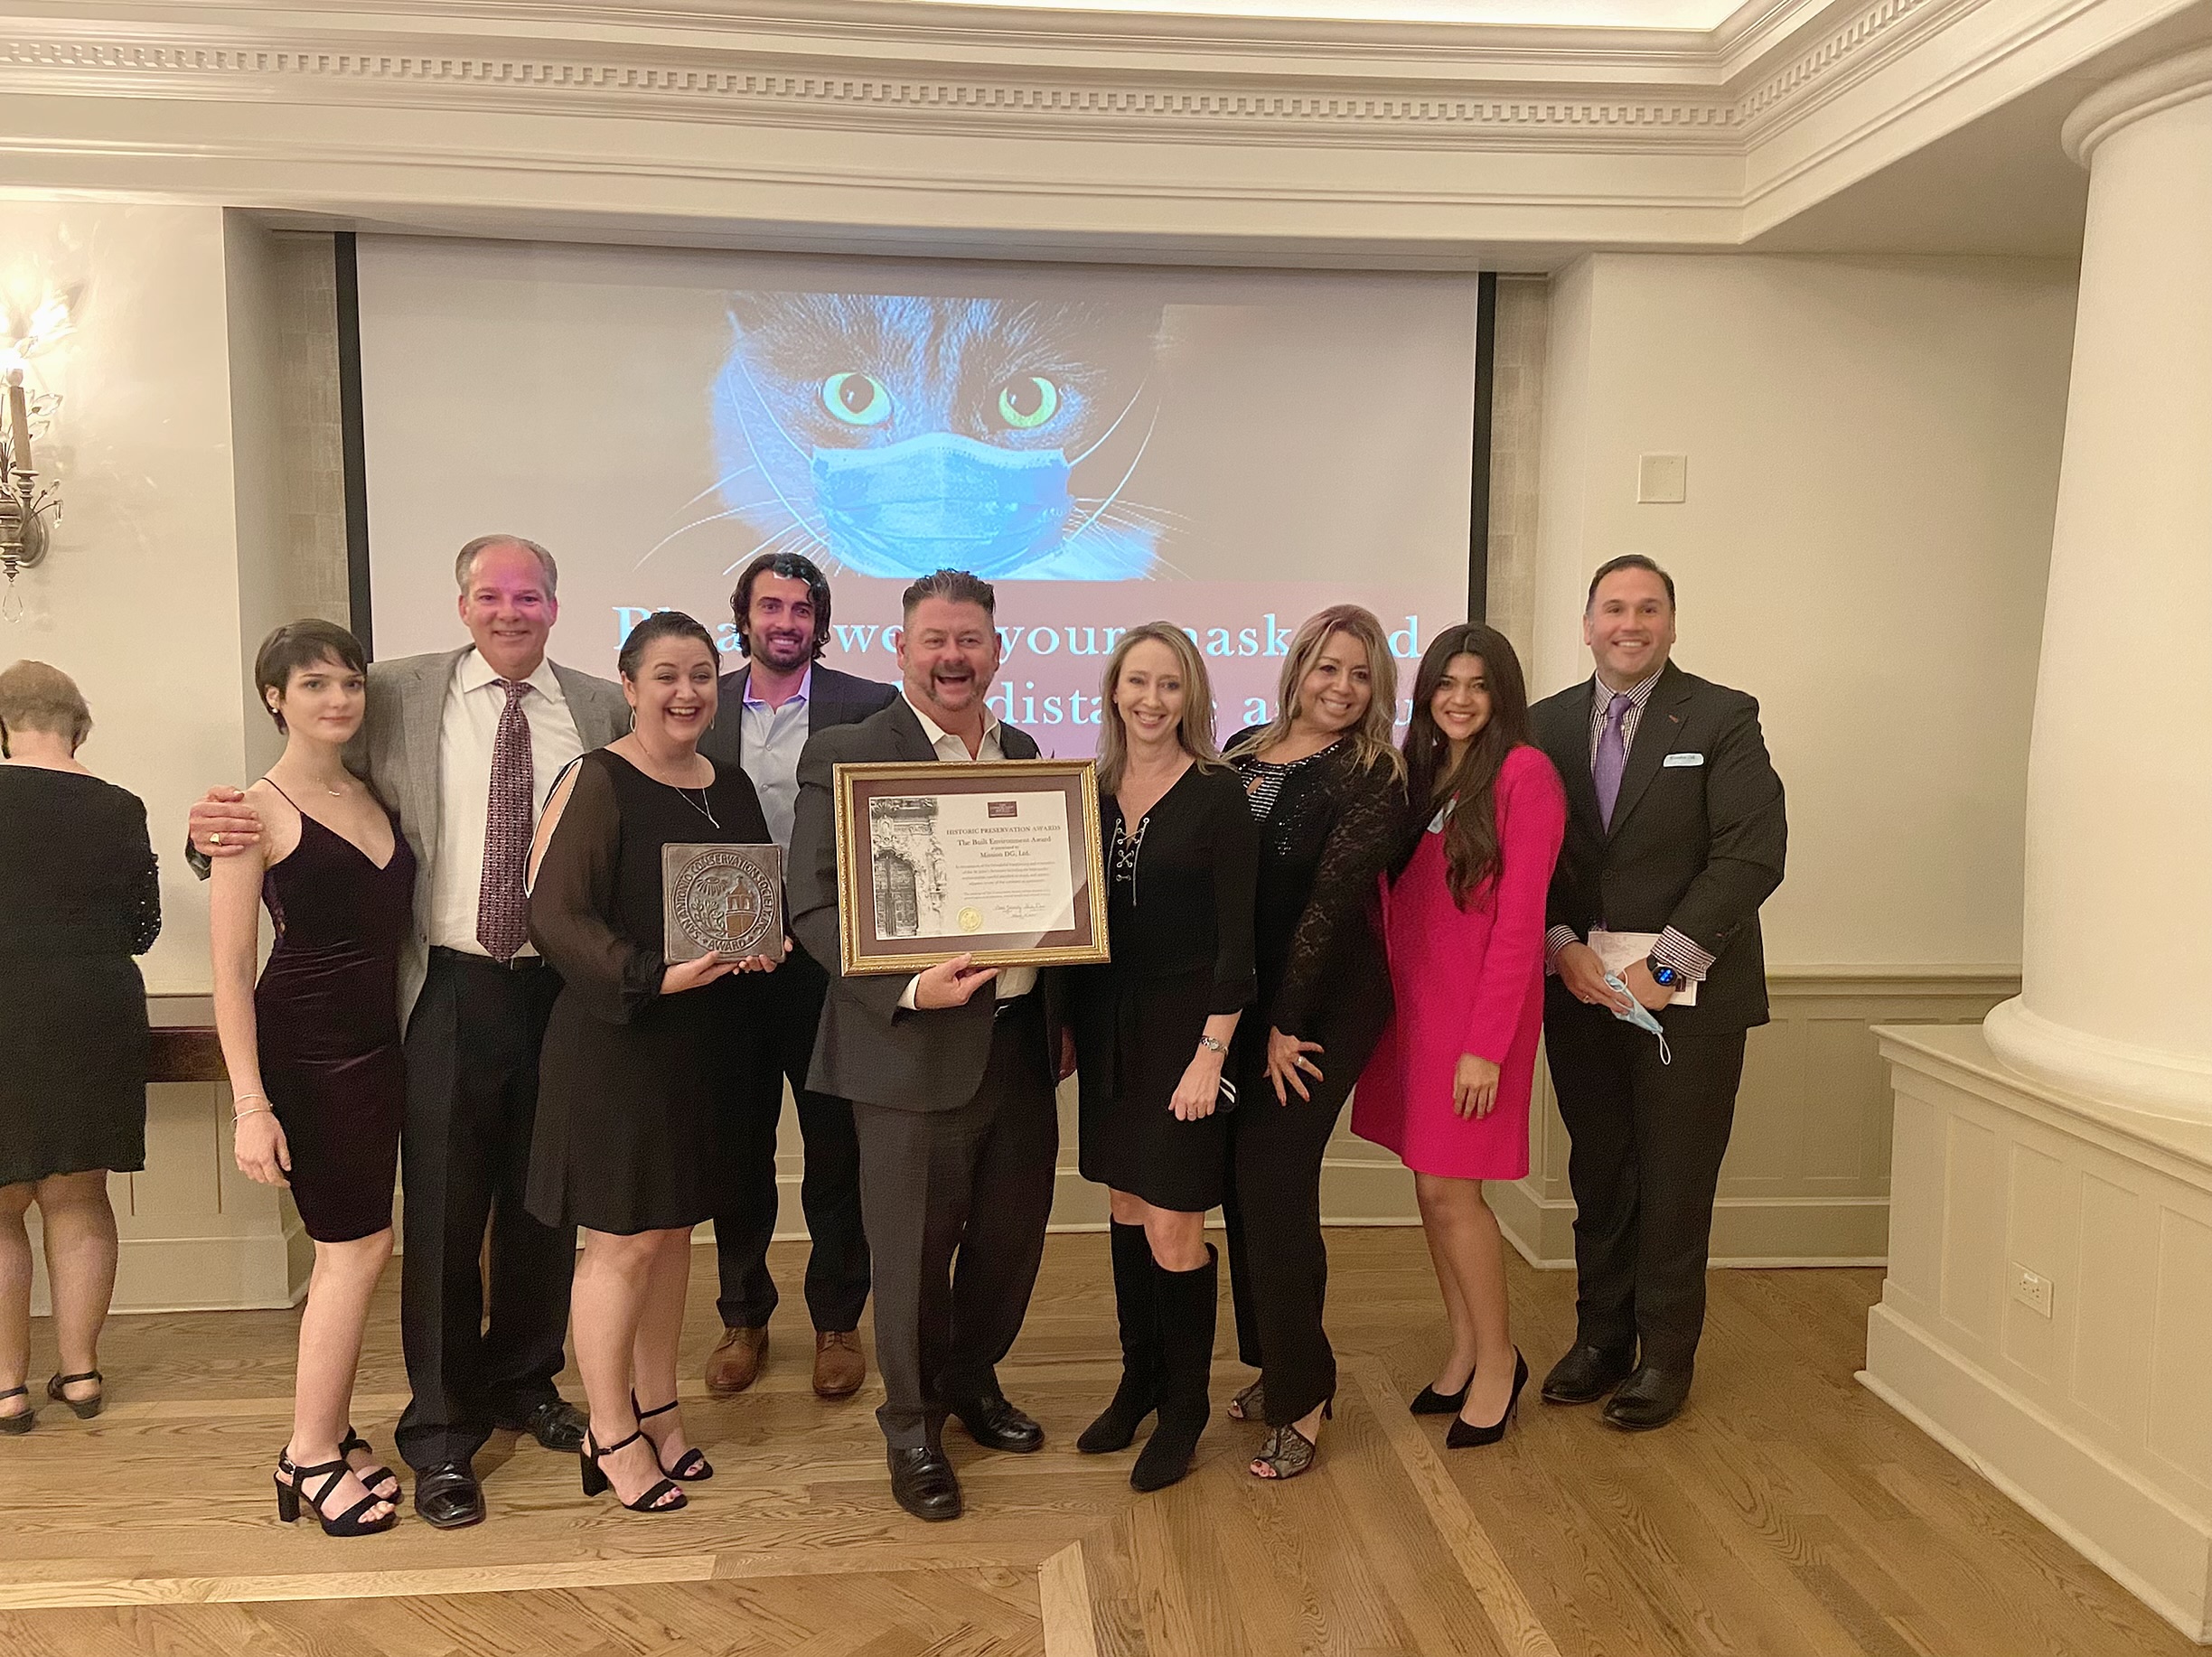 Mission DG Wins the San Antonio Conservation Award